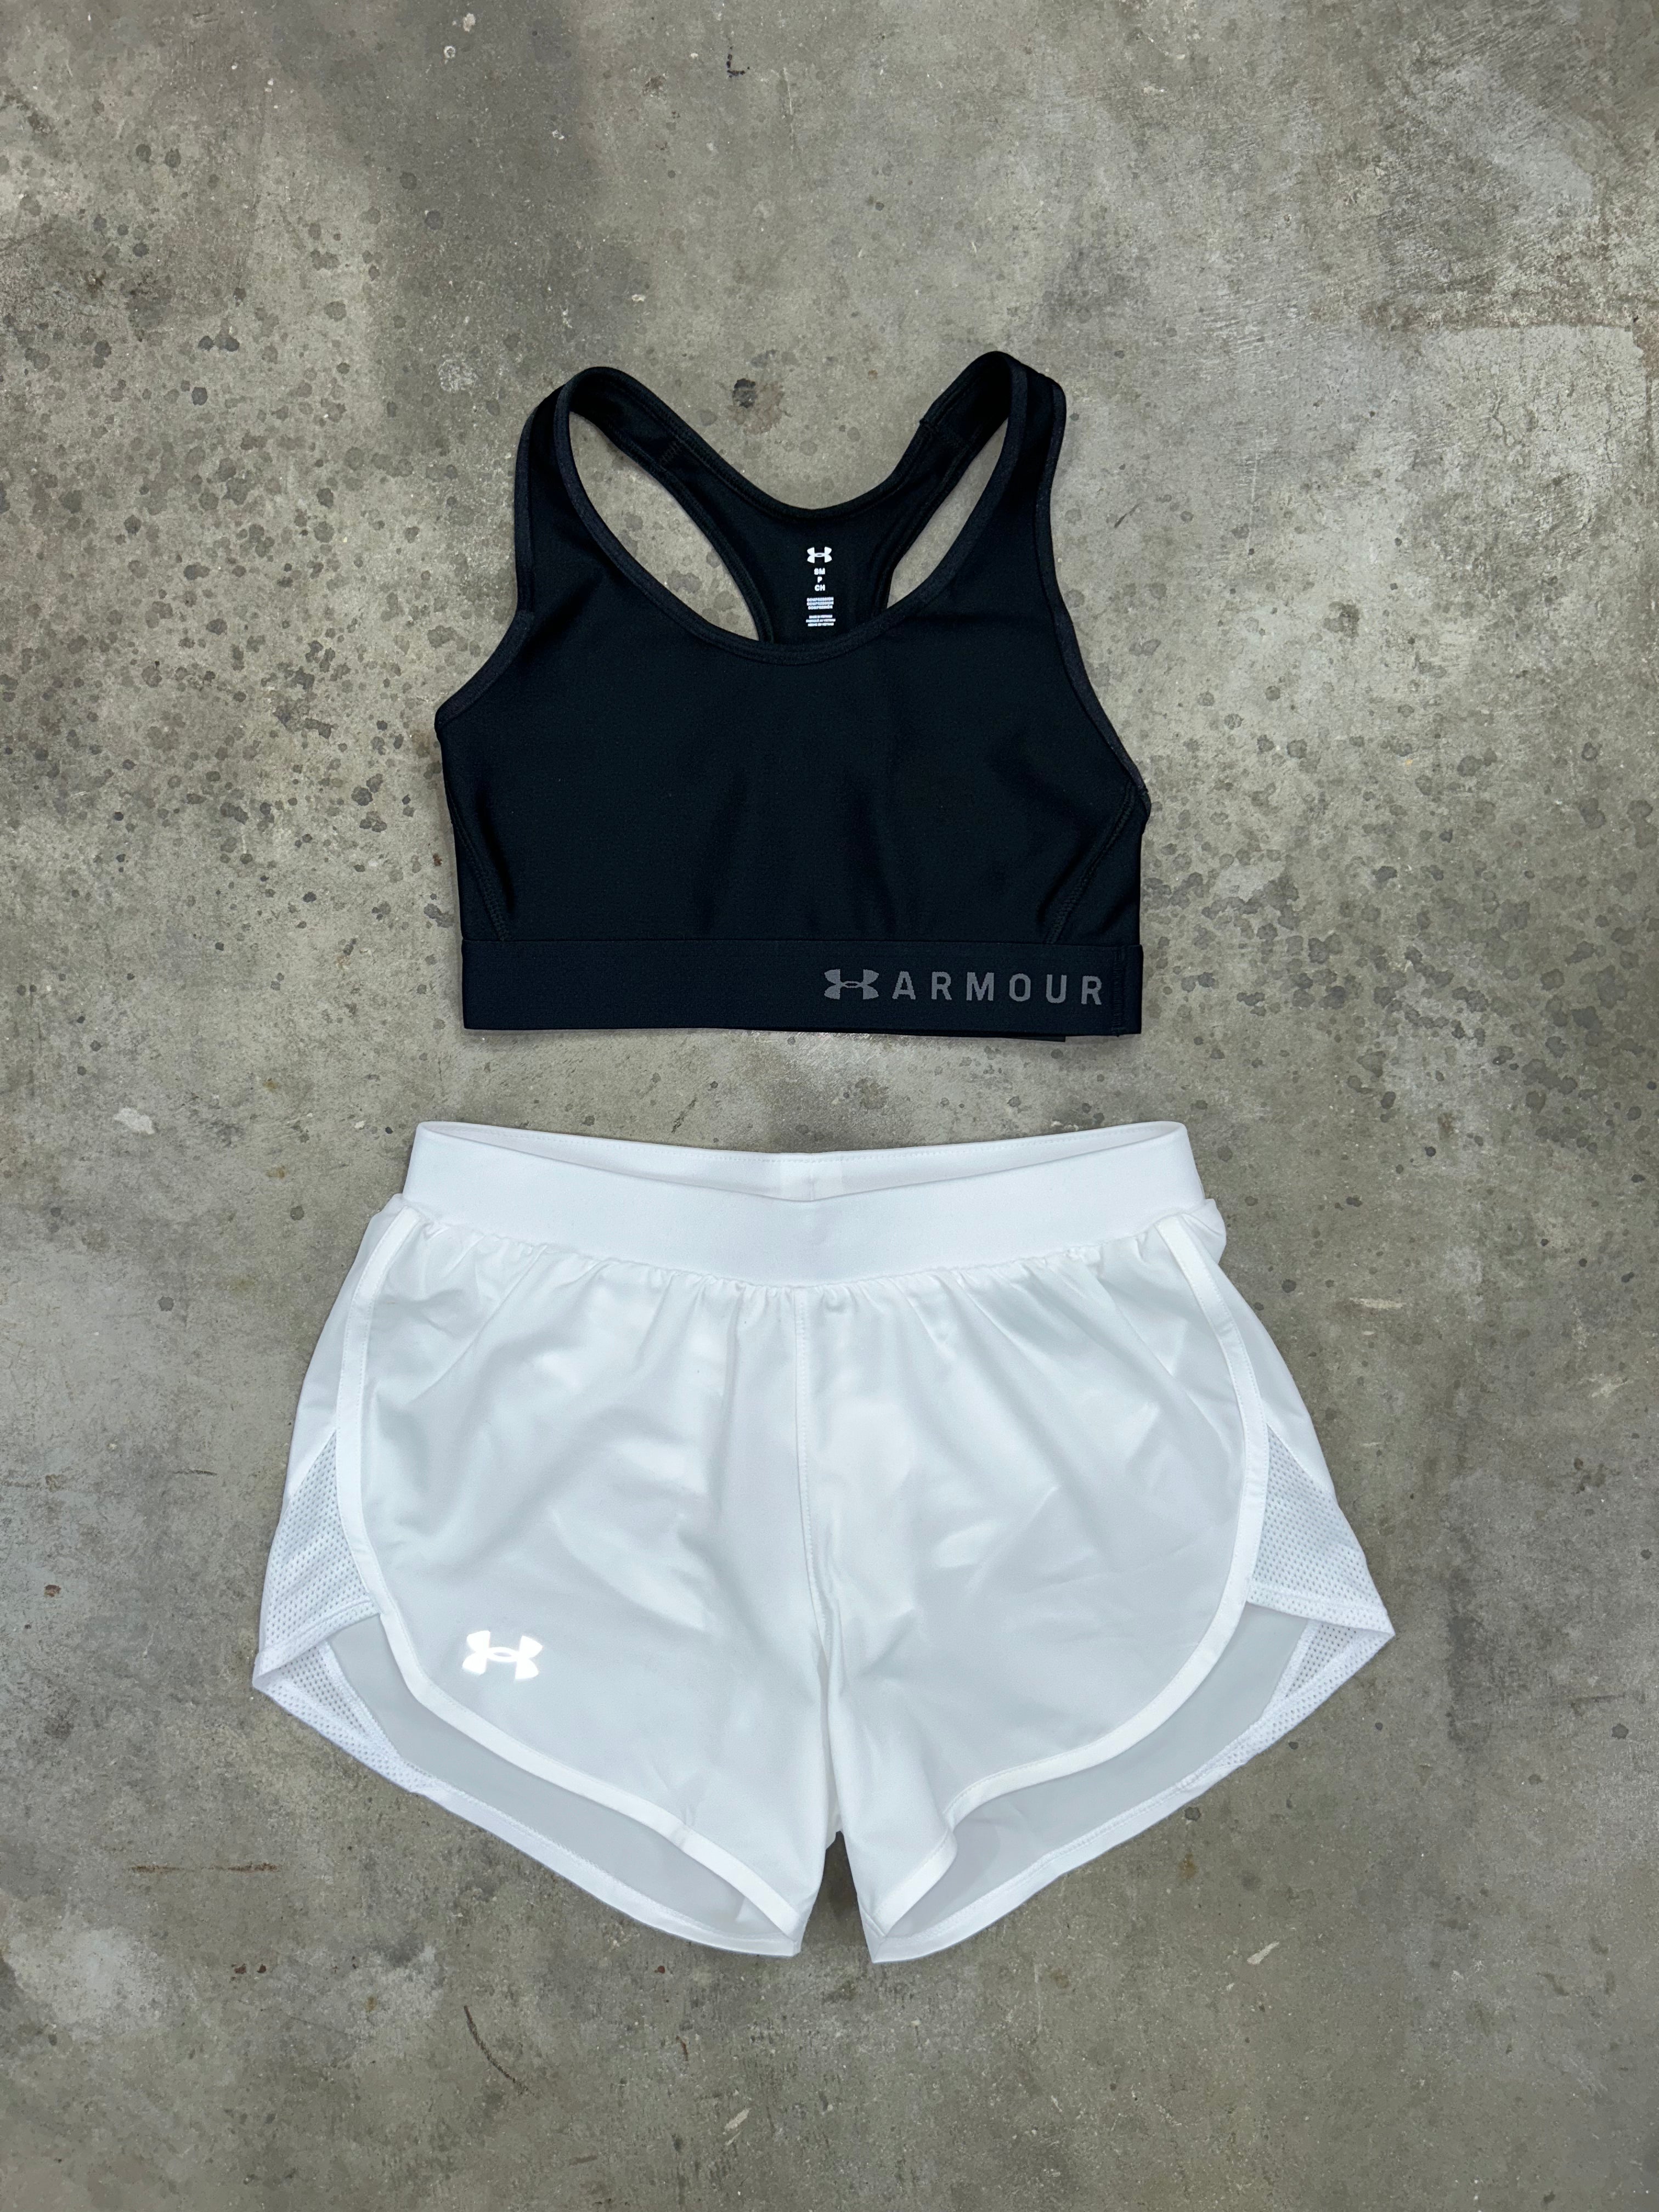 Nike All Black Set - Sports Bra / Shorts